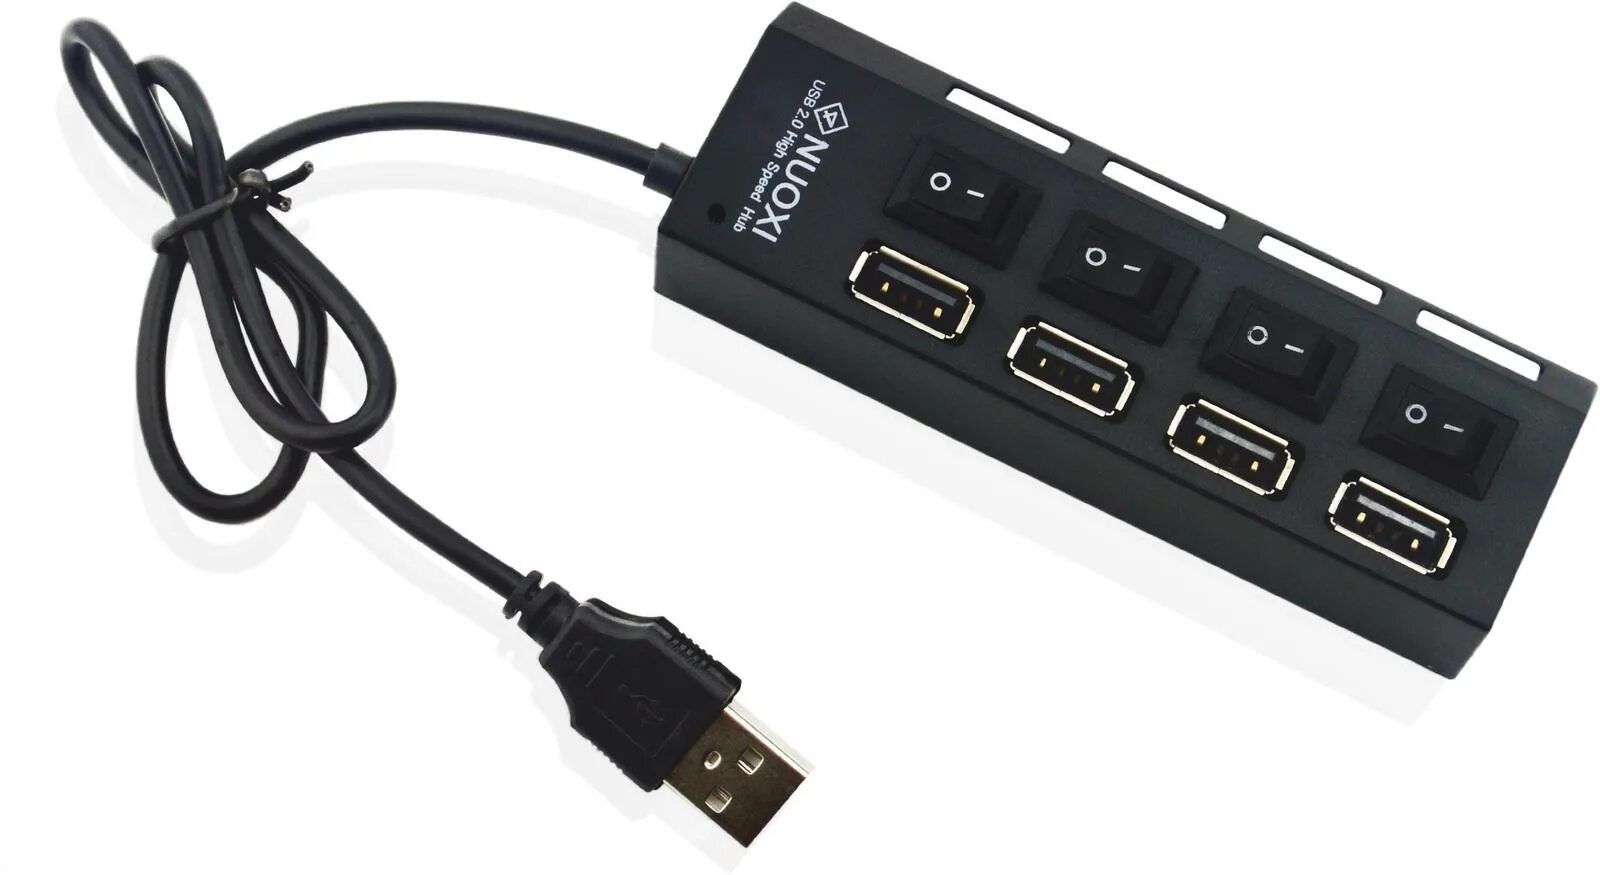 Usb 2.0 high speed. Разветвитель USB-Hub 2.0 (RTL-01a). 4 Ports USB 2.0 High Speed Hub. USB-разветвитель Esperanza USB 2.0 Hub 4-Port (ea127). USB-разветвитель (хаб) h401a.